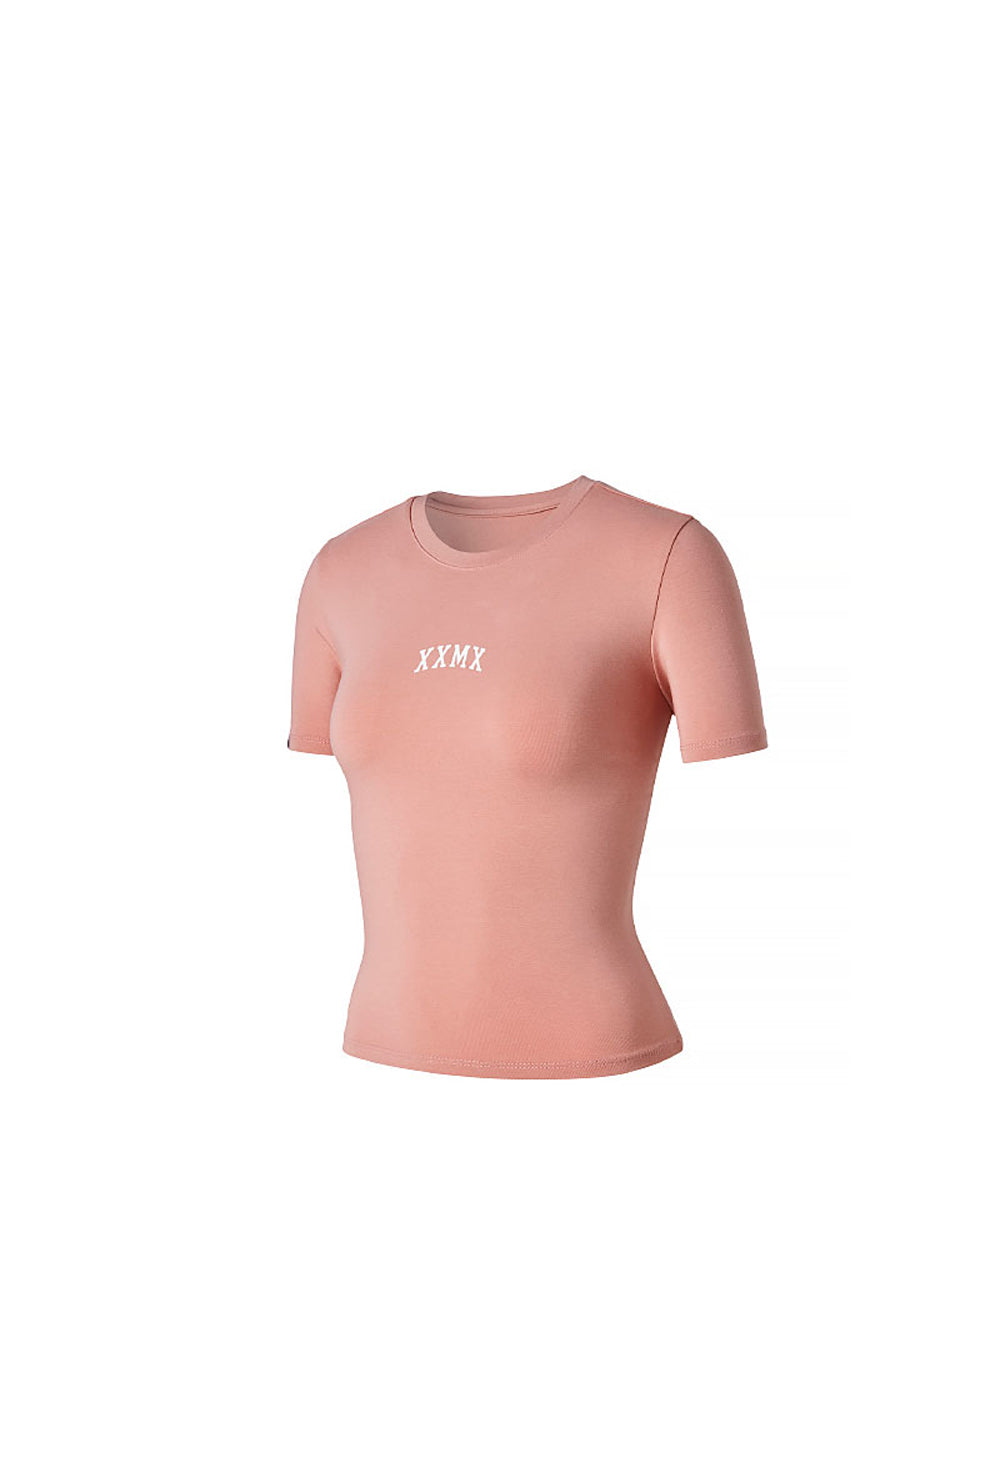 XXMX Crop Short Sleeve - Pink Haze